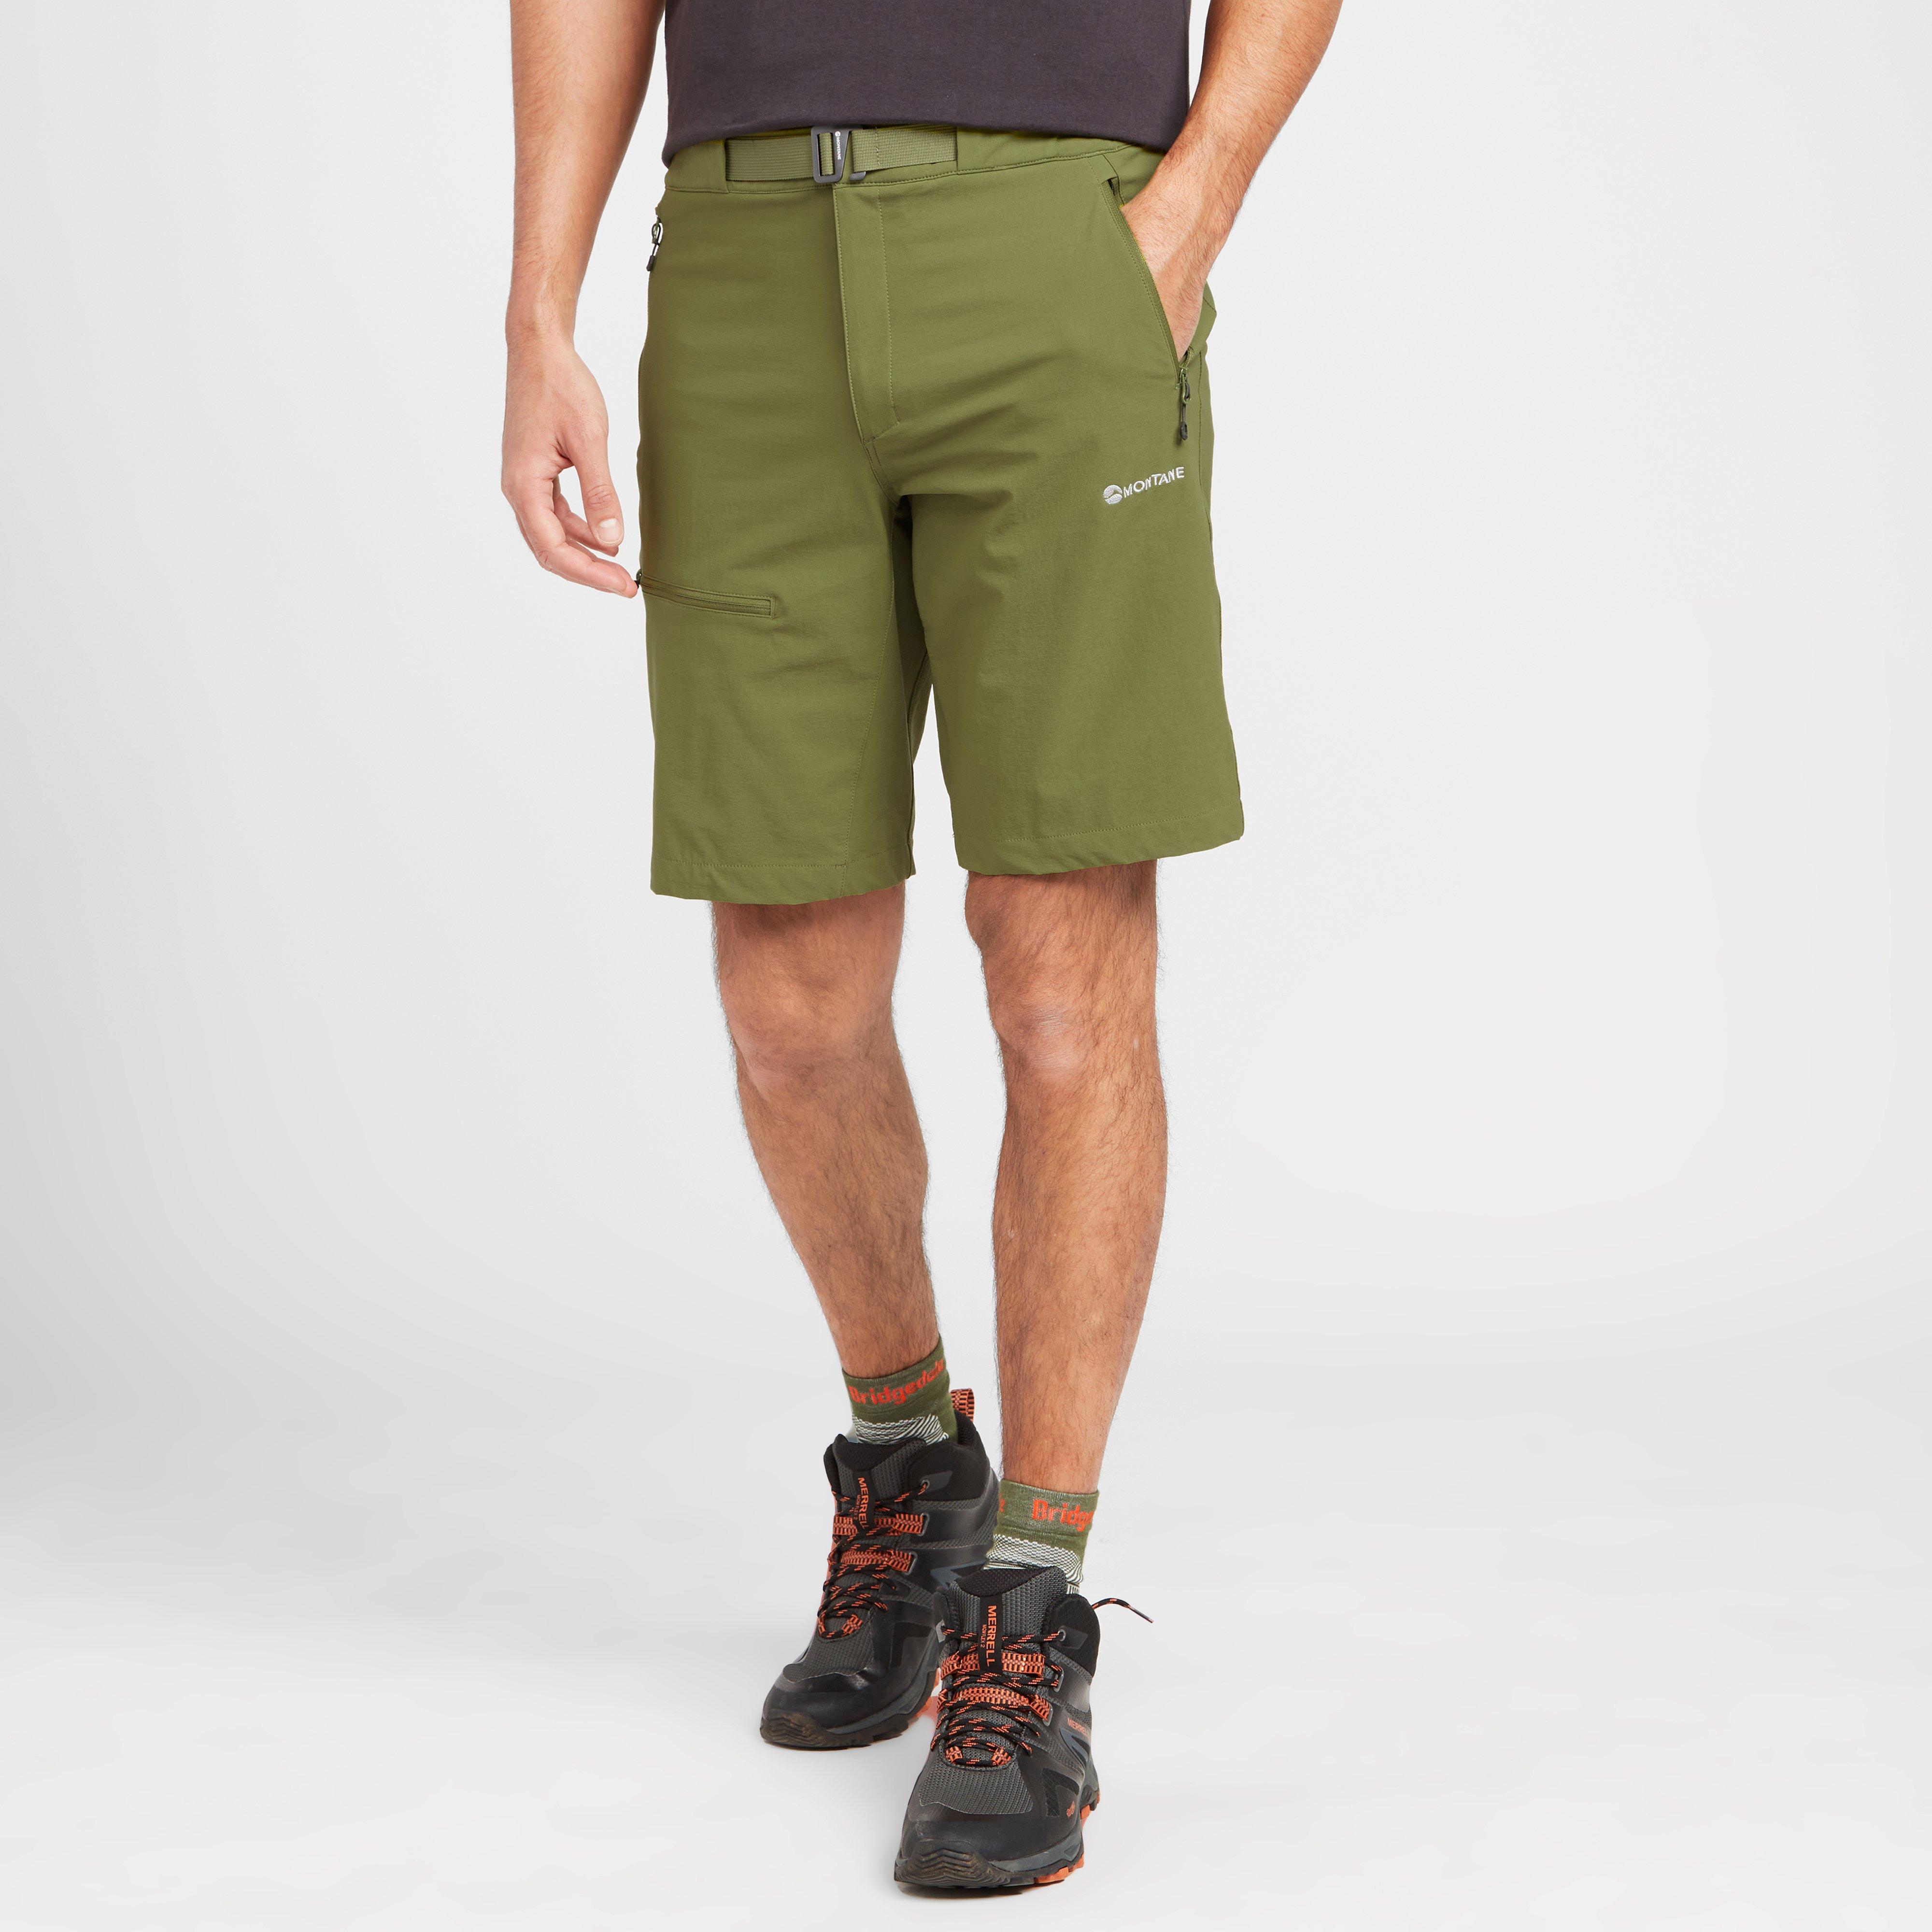 montane men's tenacity shorts - green, green